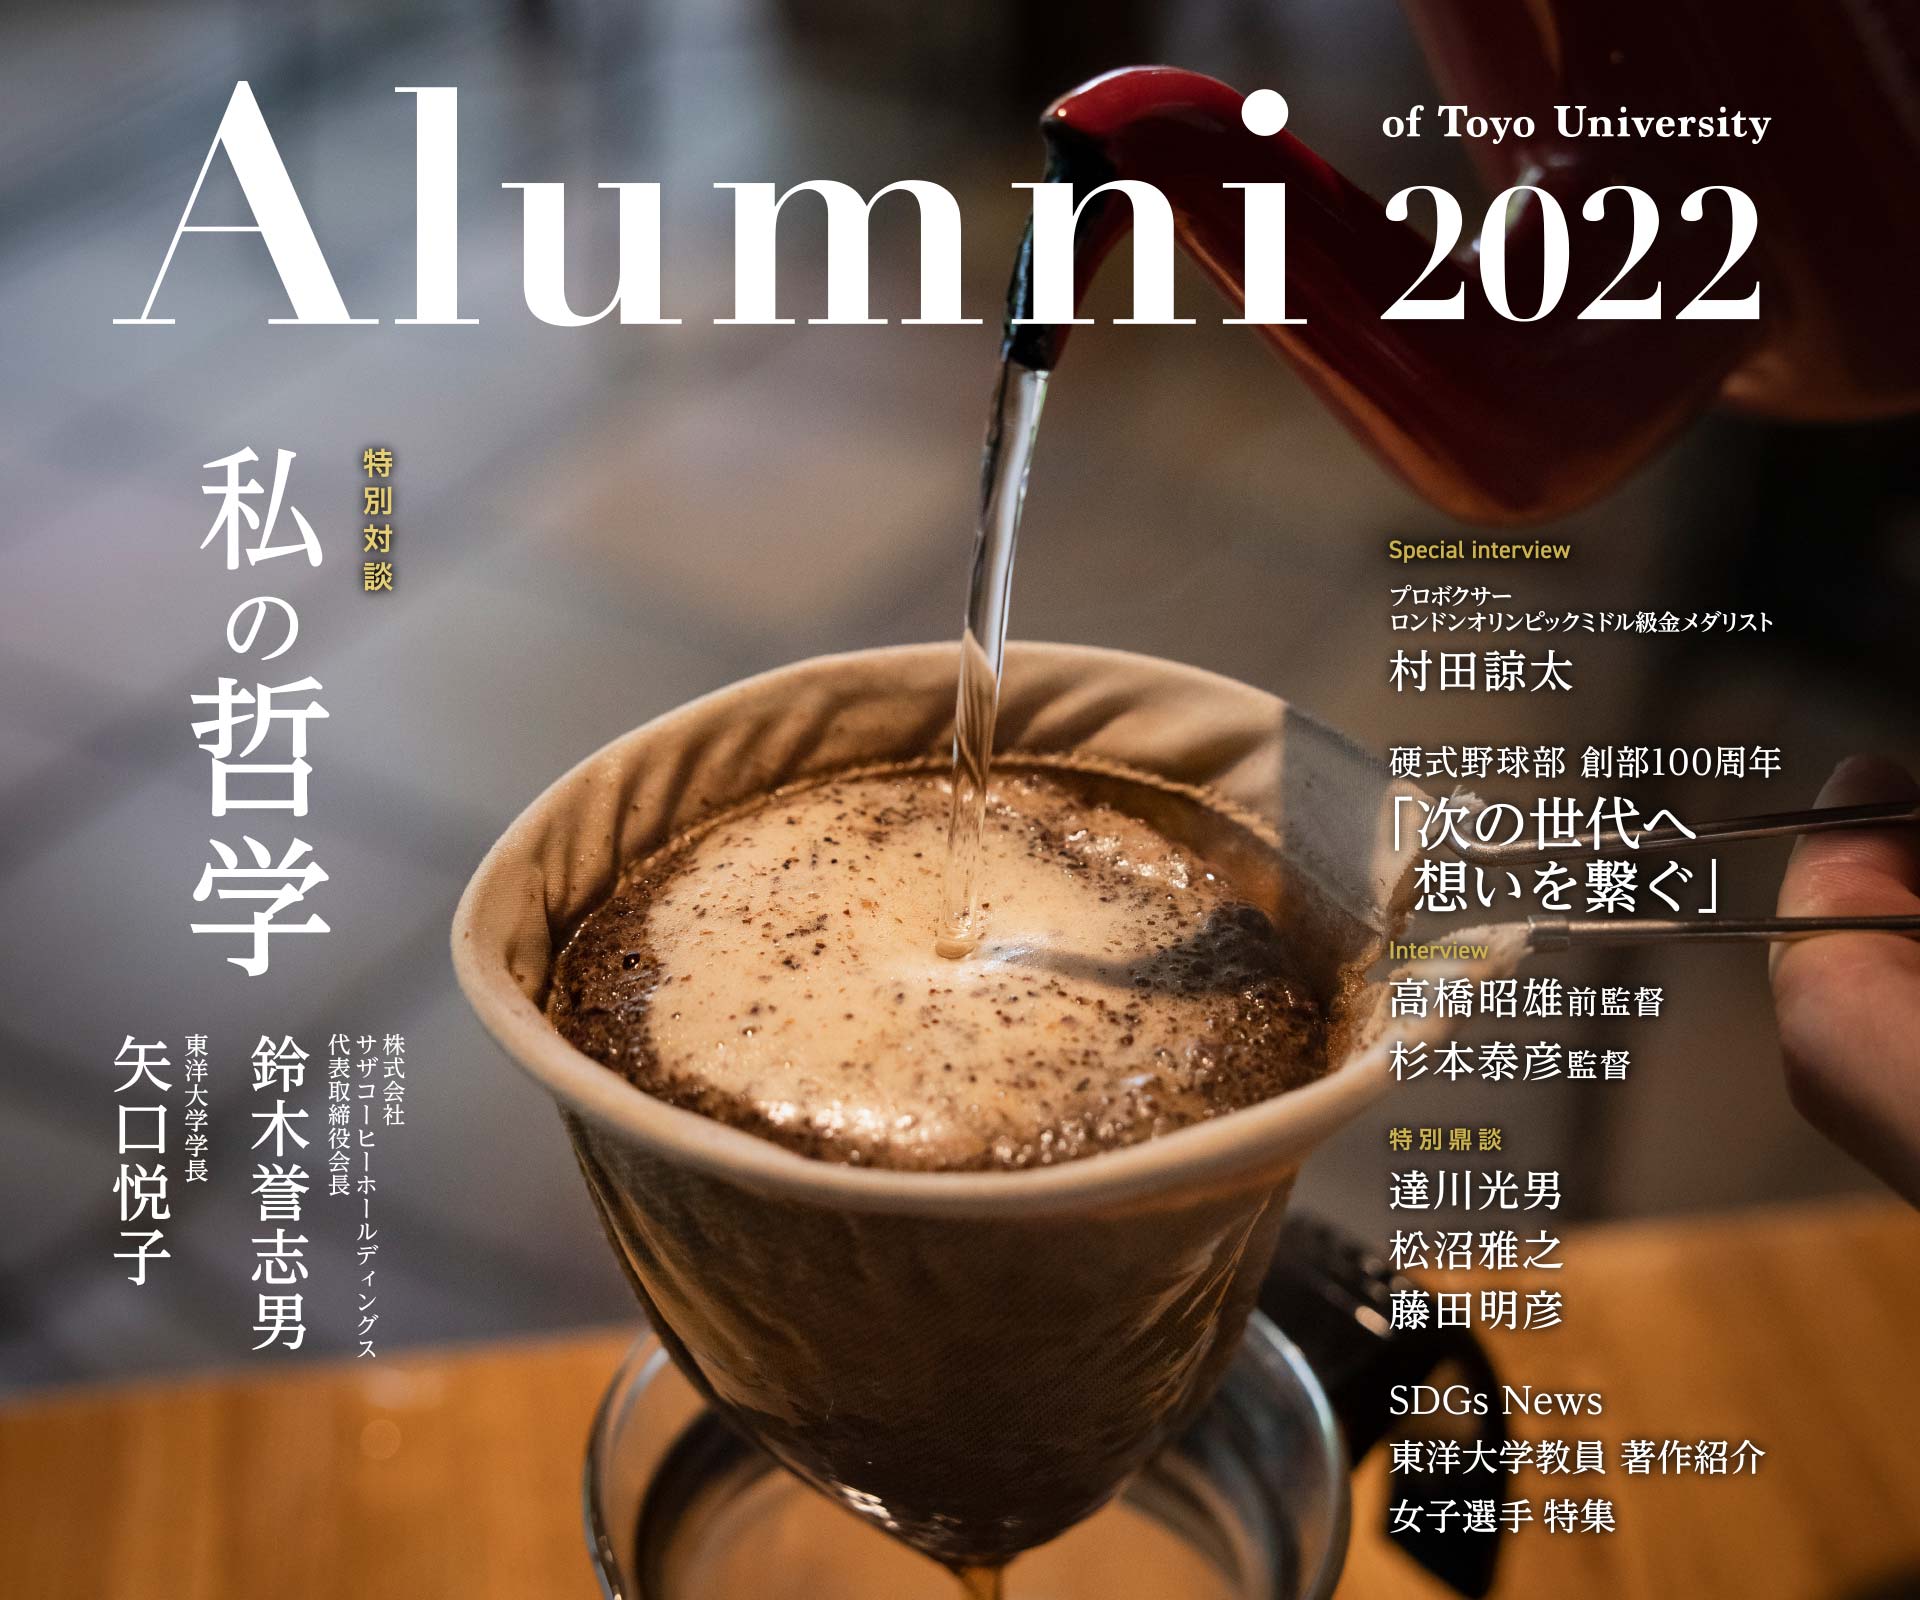 Alumni 2022 of Toyo University アルマナイ2022 東洋大学